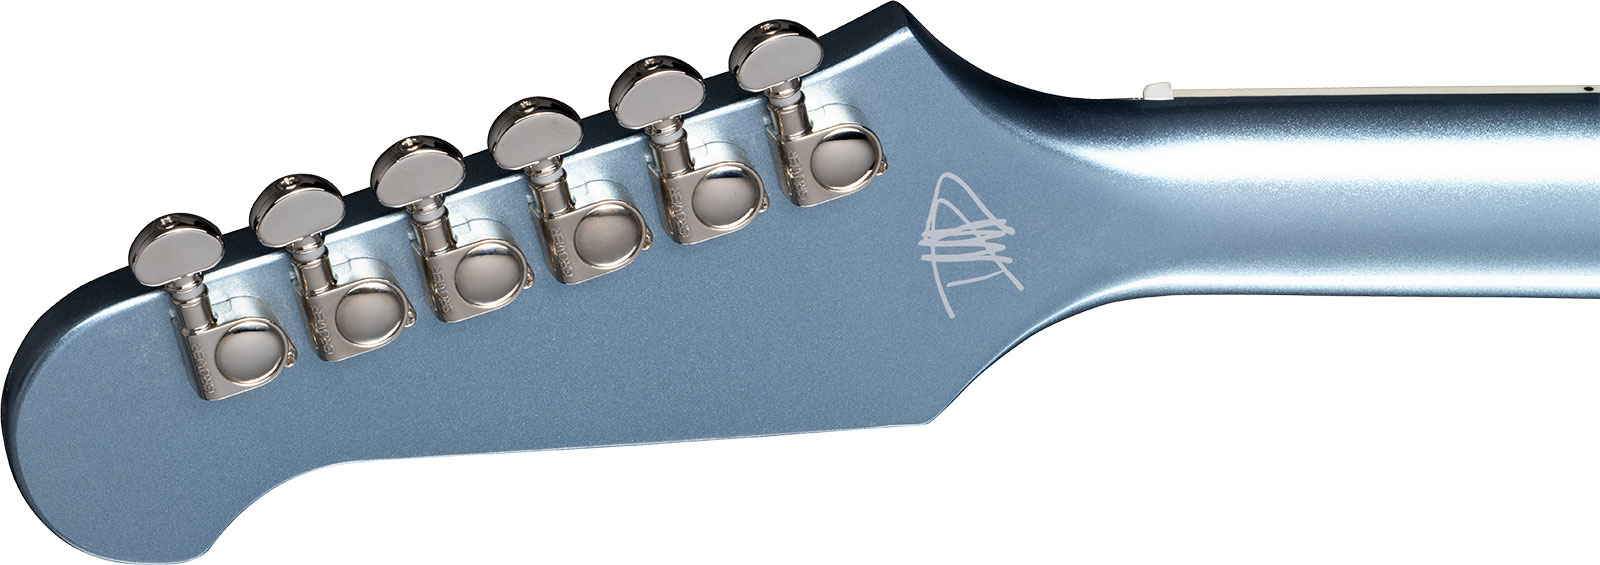 Epiphone Dave Grohl Dg-335 Signature 2h Ht Lau - Pelham Blue - Semi hollow elektriche gitaar - Variation 4